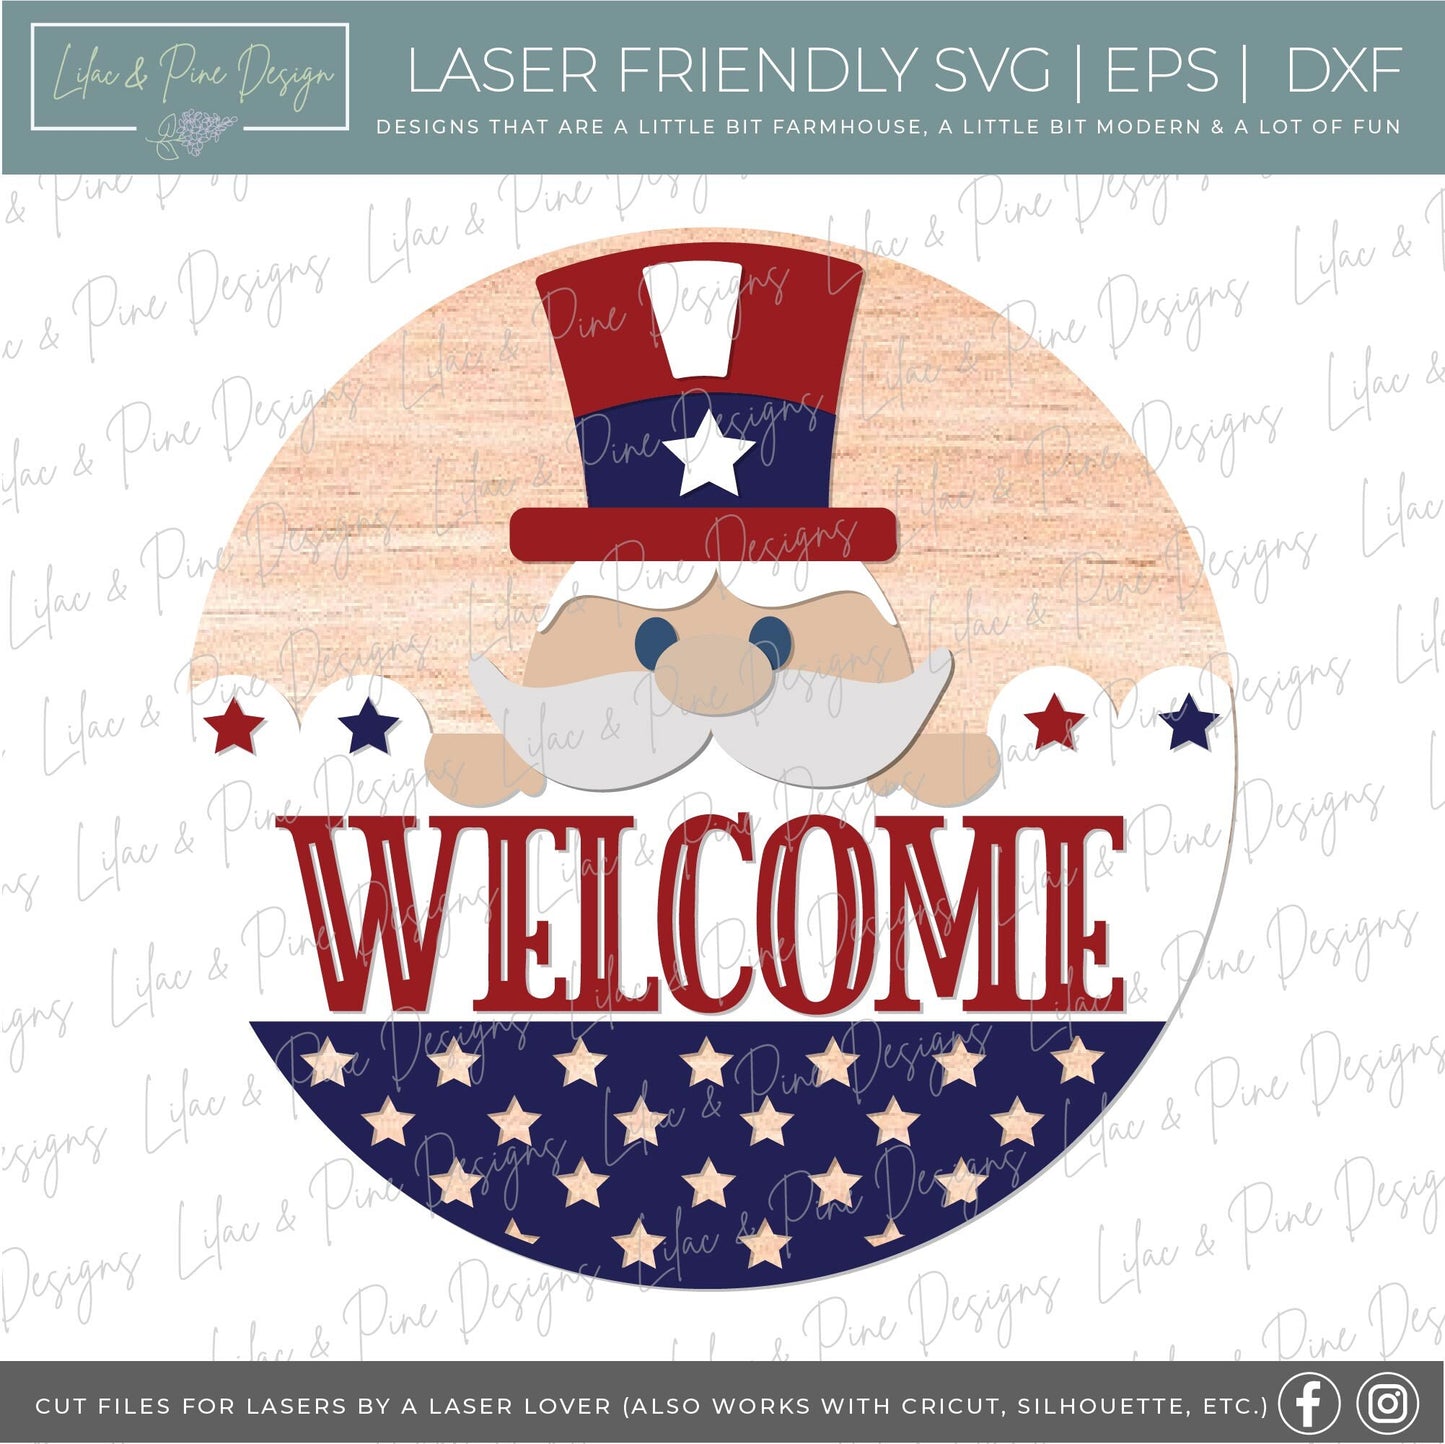 Uncle Sam door hanger SVG, Happy 4th of July welcome sign, Fourth of July decor, Patriotic round sign SVG, Glowforge SVG, laser cut file